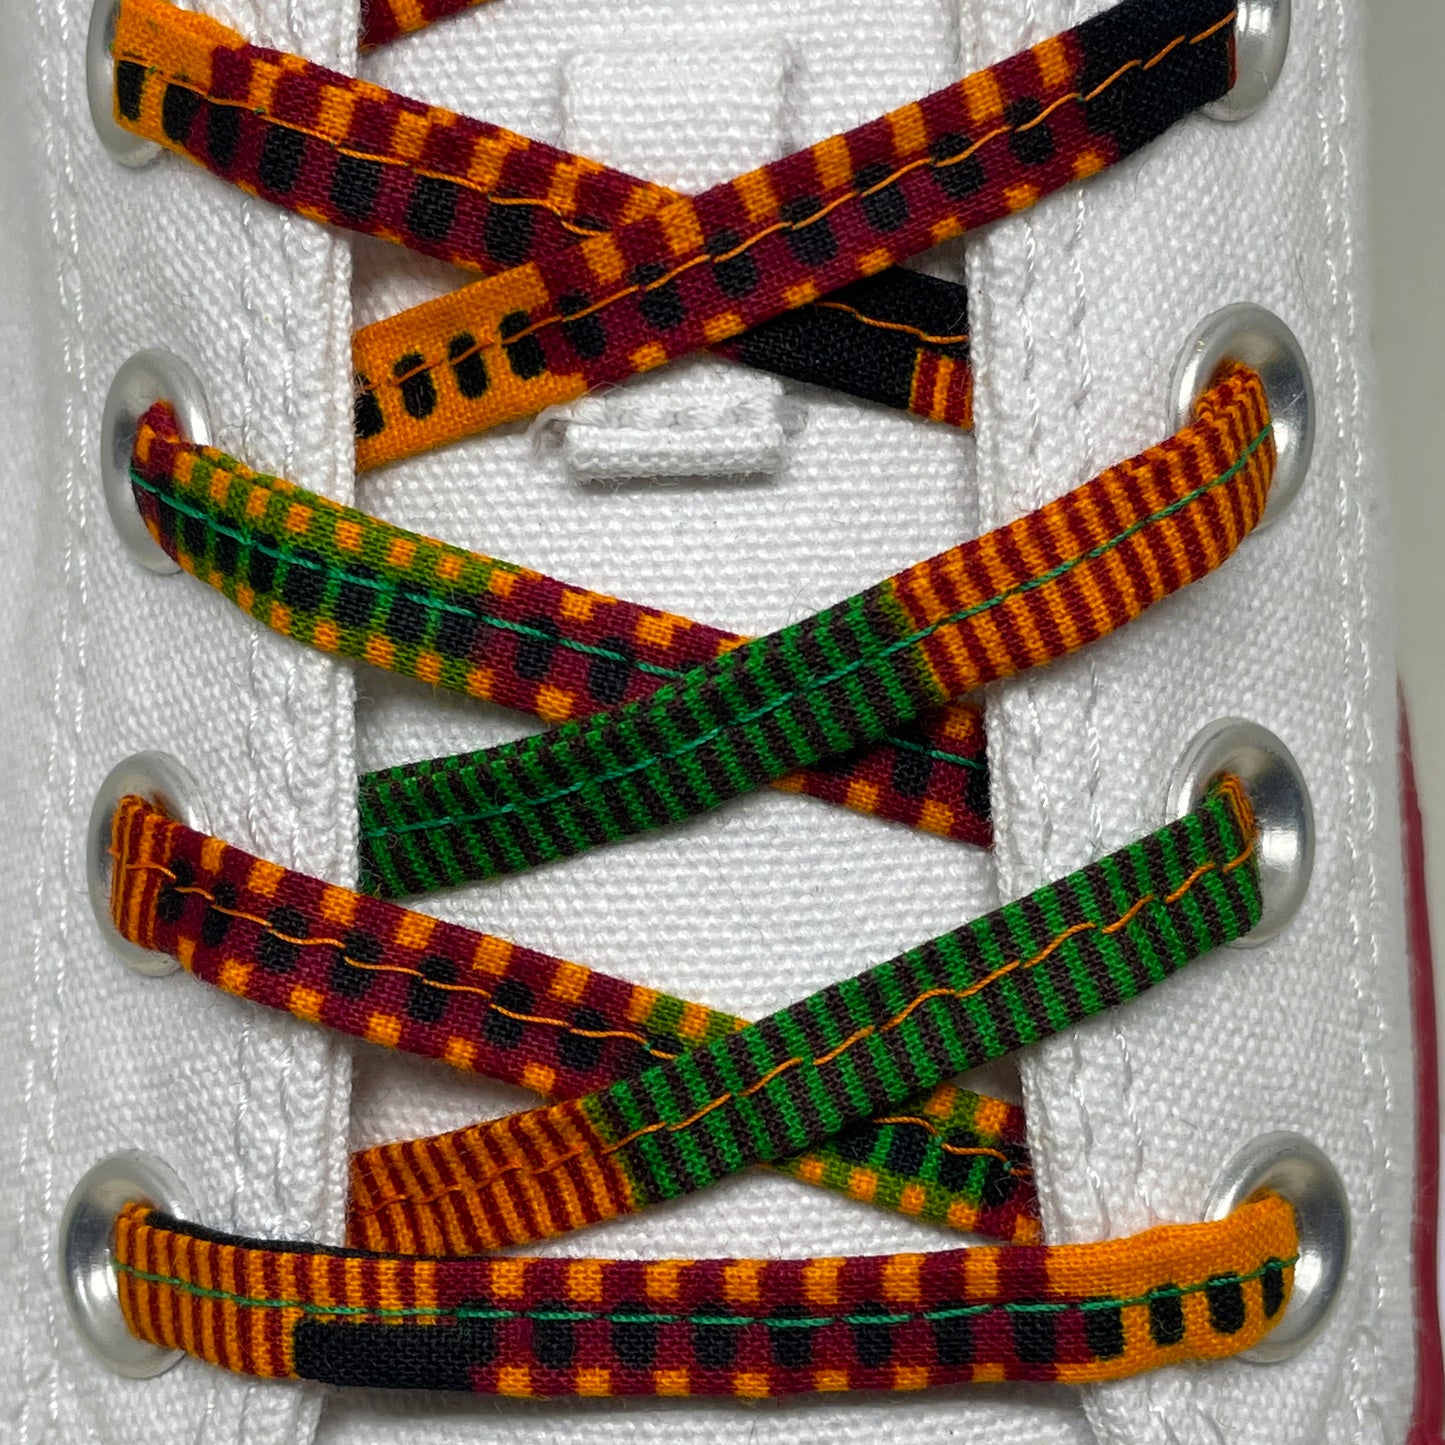 Amahle Wax Print Laces - Black/Orange/Green/Burgundy Kenté - House Of Nambili